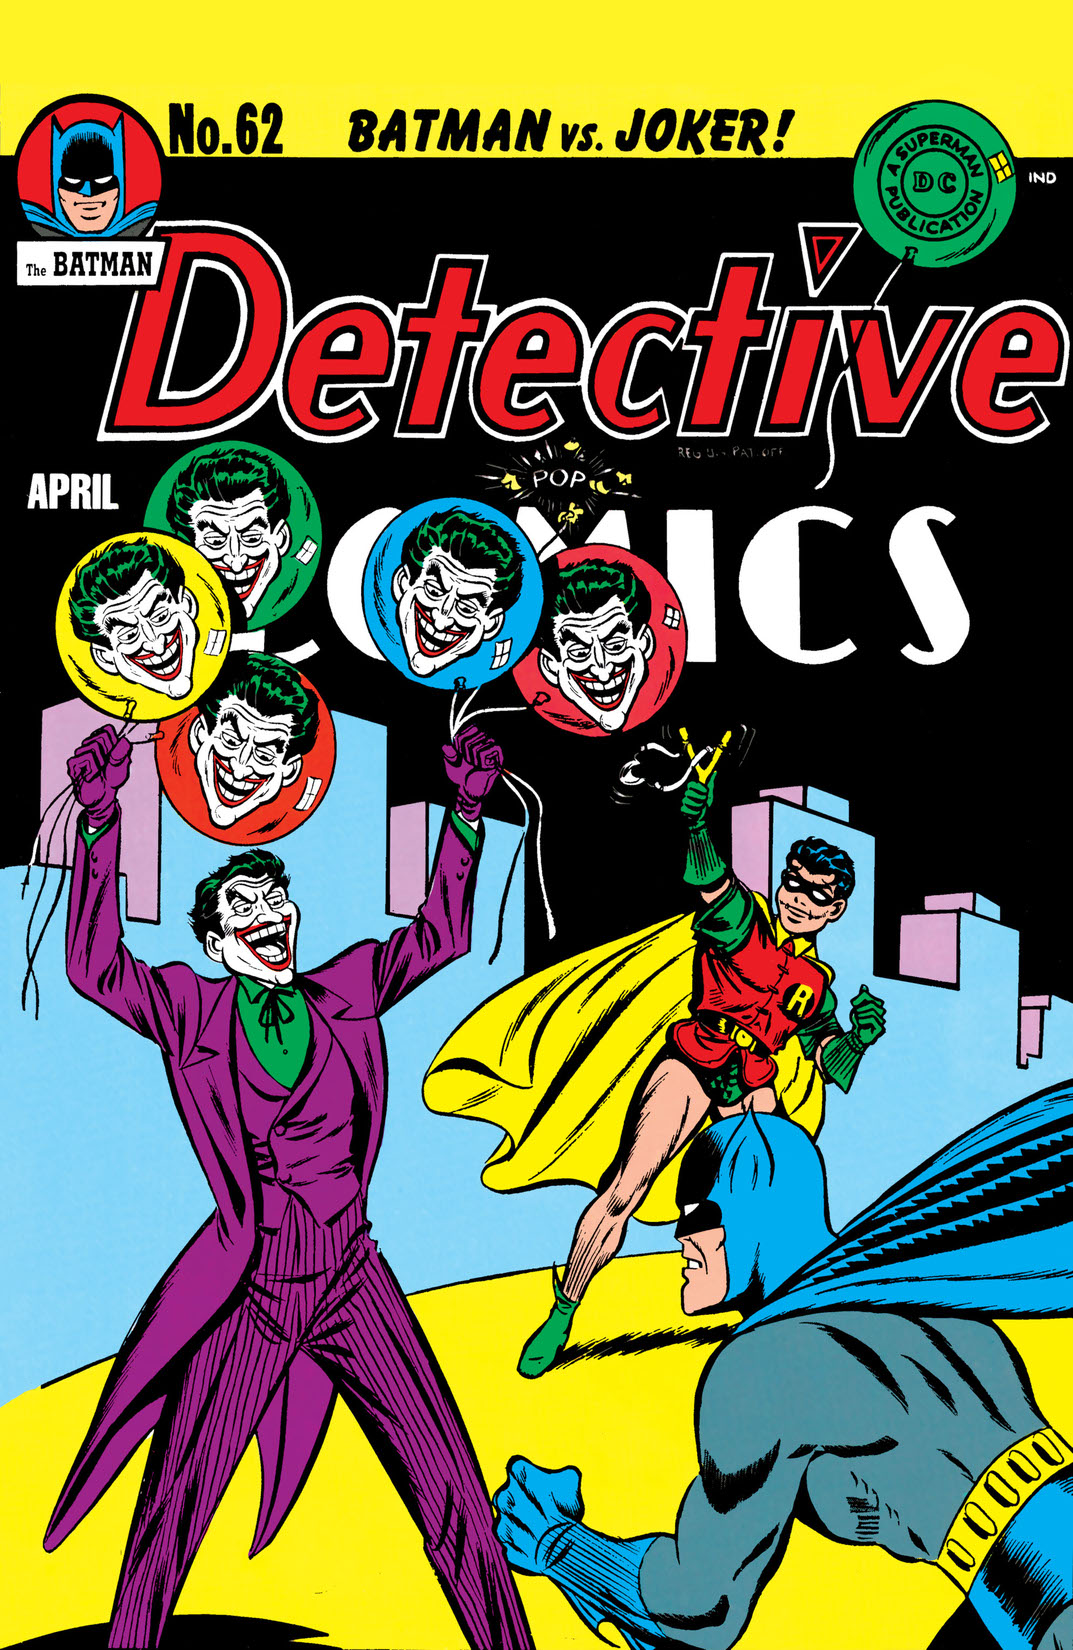 Detective Comics (1937-) #62 preview images